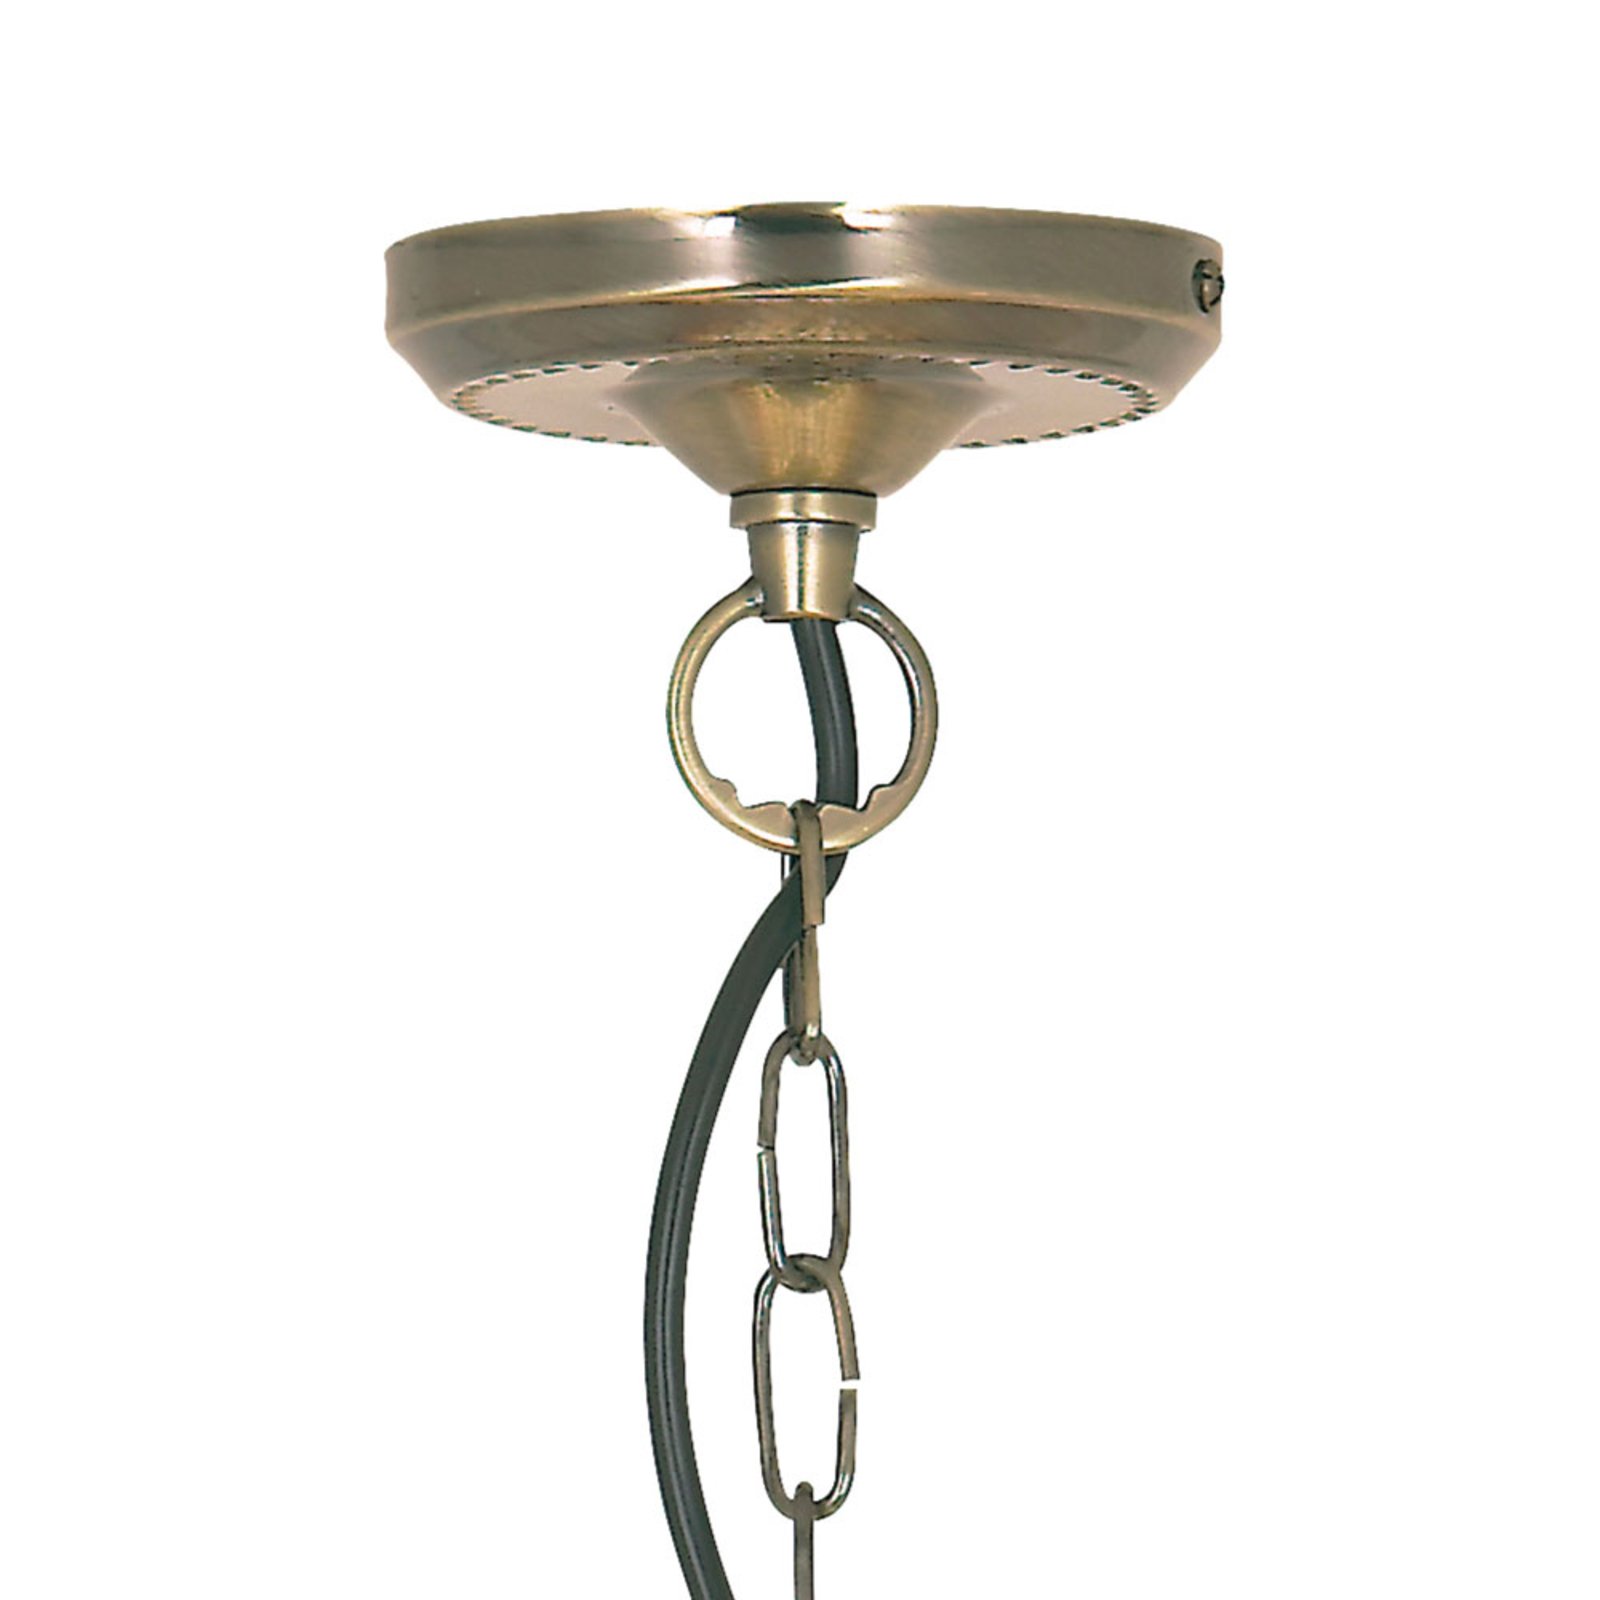 Klassieke Tiffany-stijl hanglamp DRAGONFLY